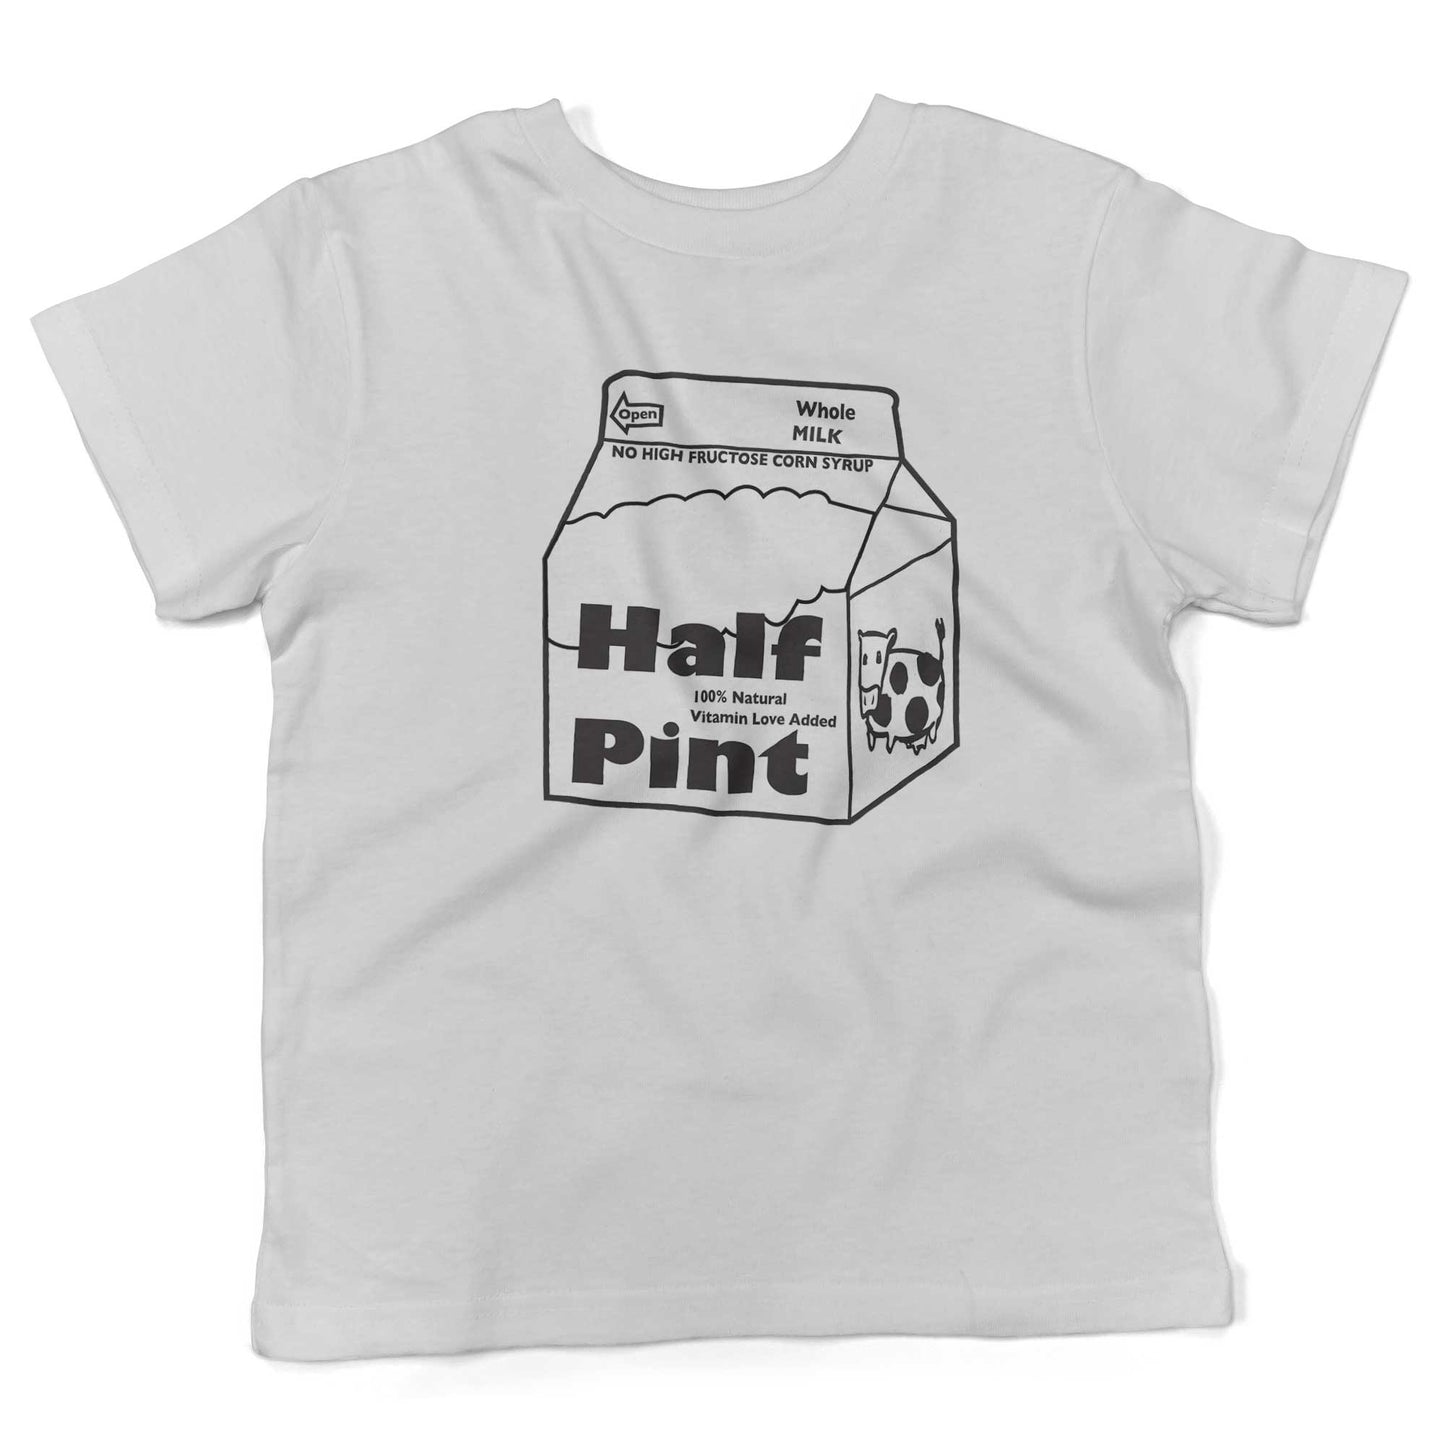 Half Pint Of Milk Toddler Shirt-White-2T